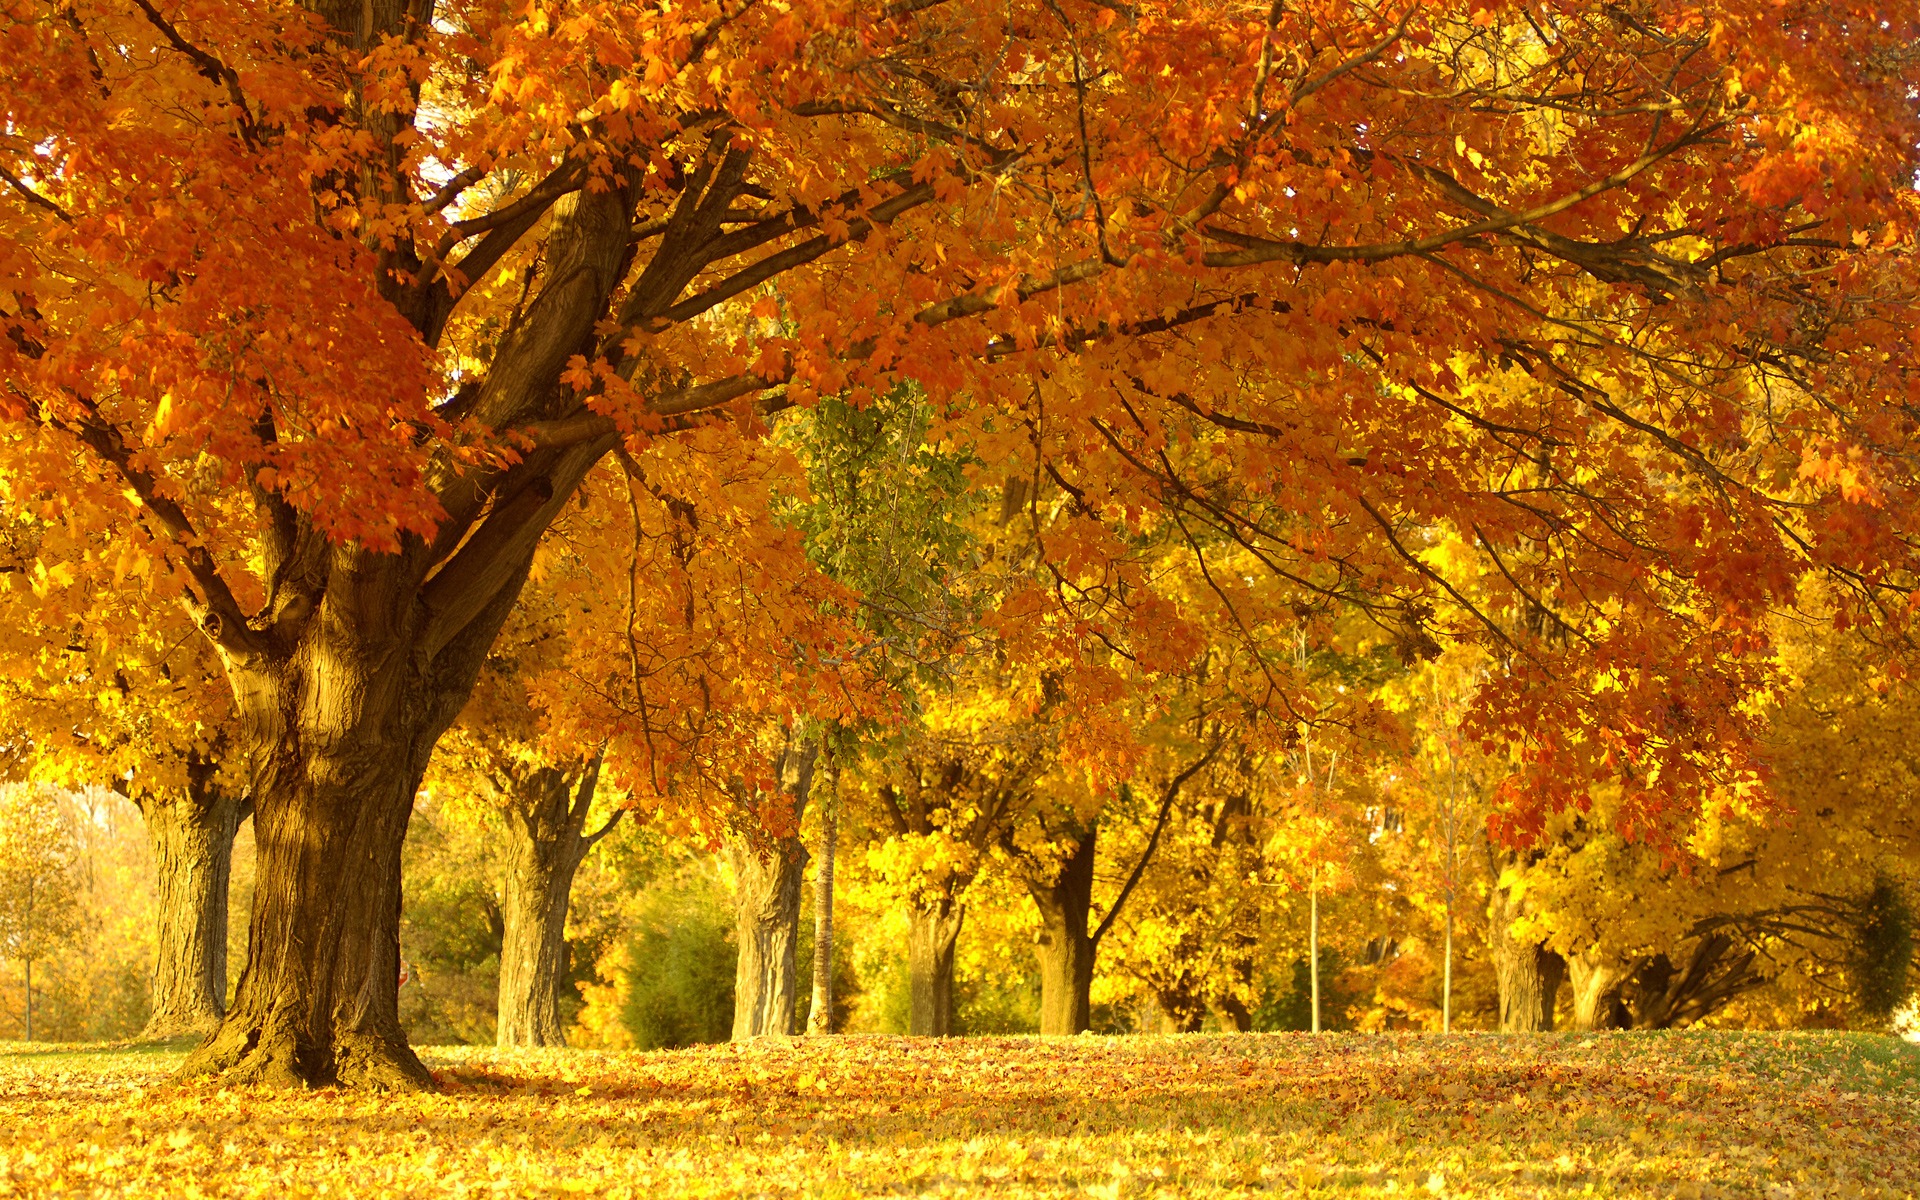 Golden Autumn Tree Wallpaper Autumn Nature Wallpapers in jpg format for